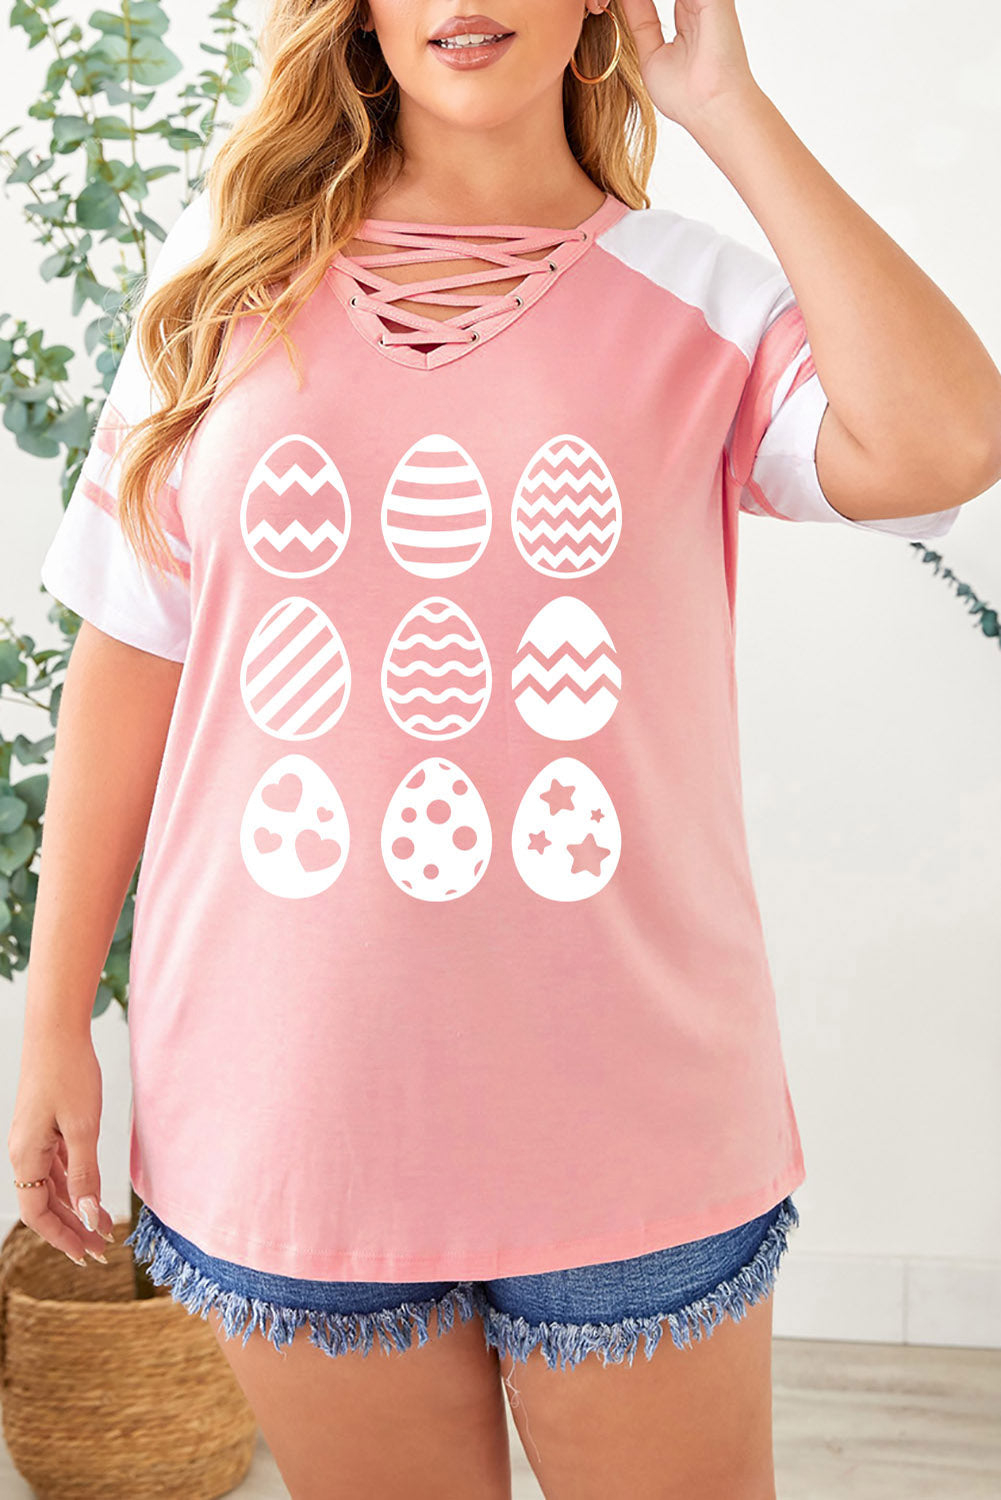 Plus Size Easter Egg Graphic Crisscross Tee Shirt